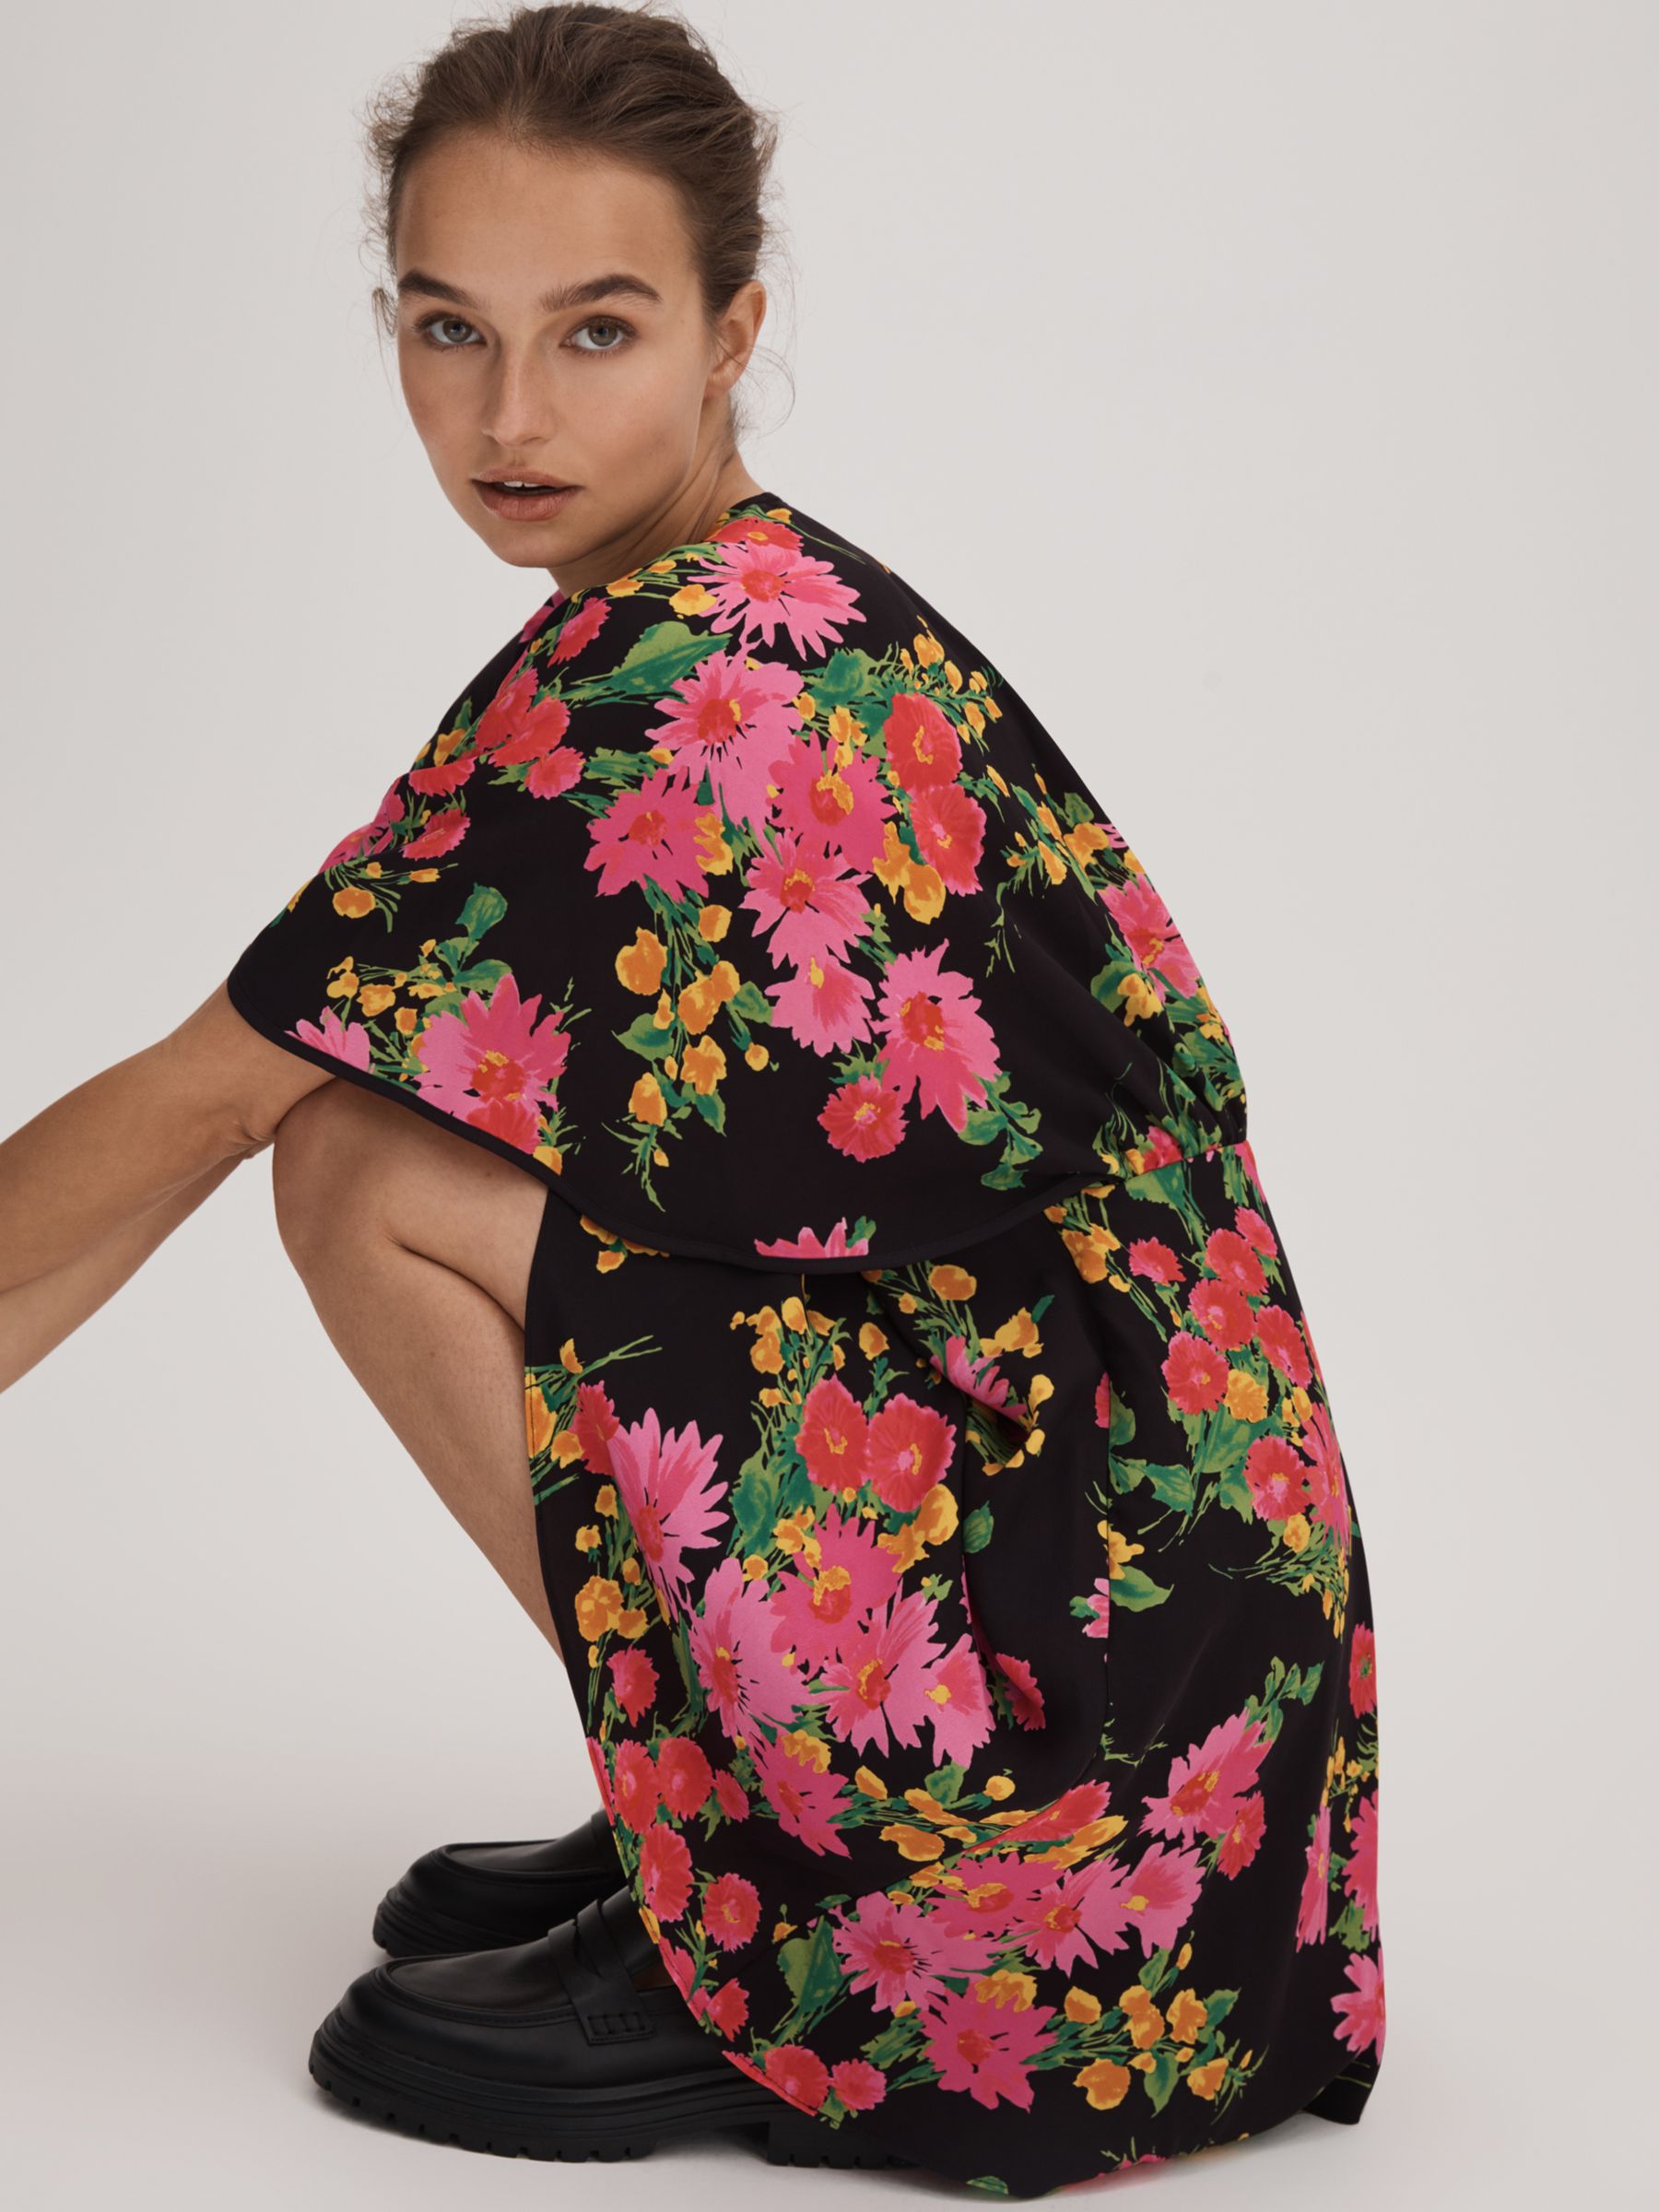 Buy FLORERE Cape Back Detail Floral Print Mini Dress, Black/Multi Online at johnlewis.com